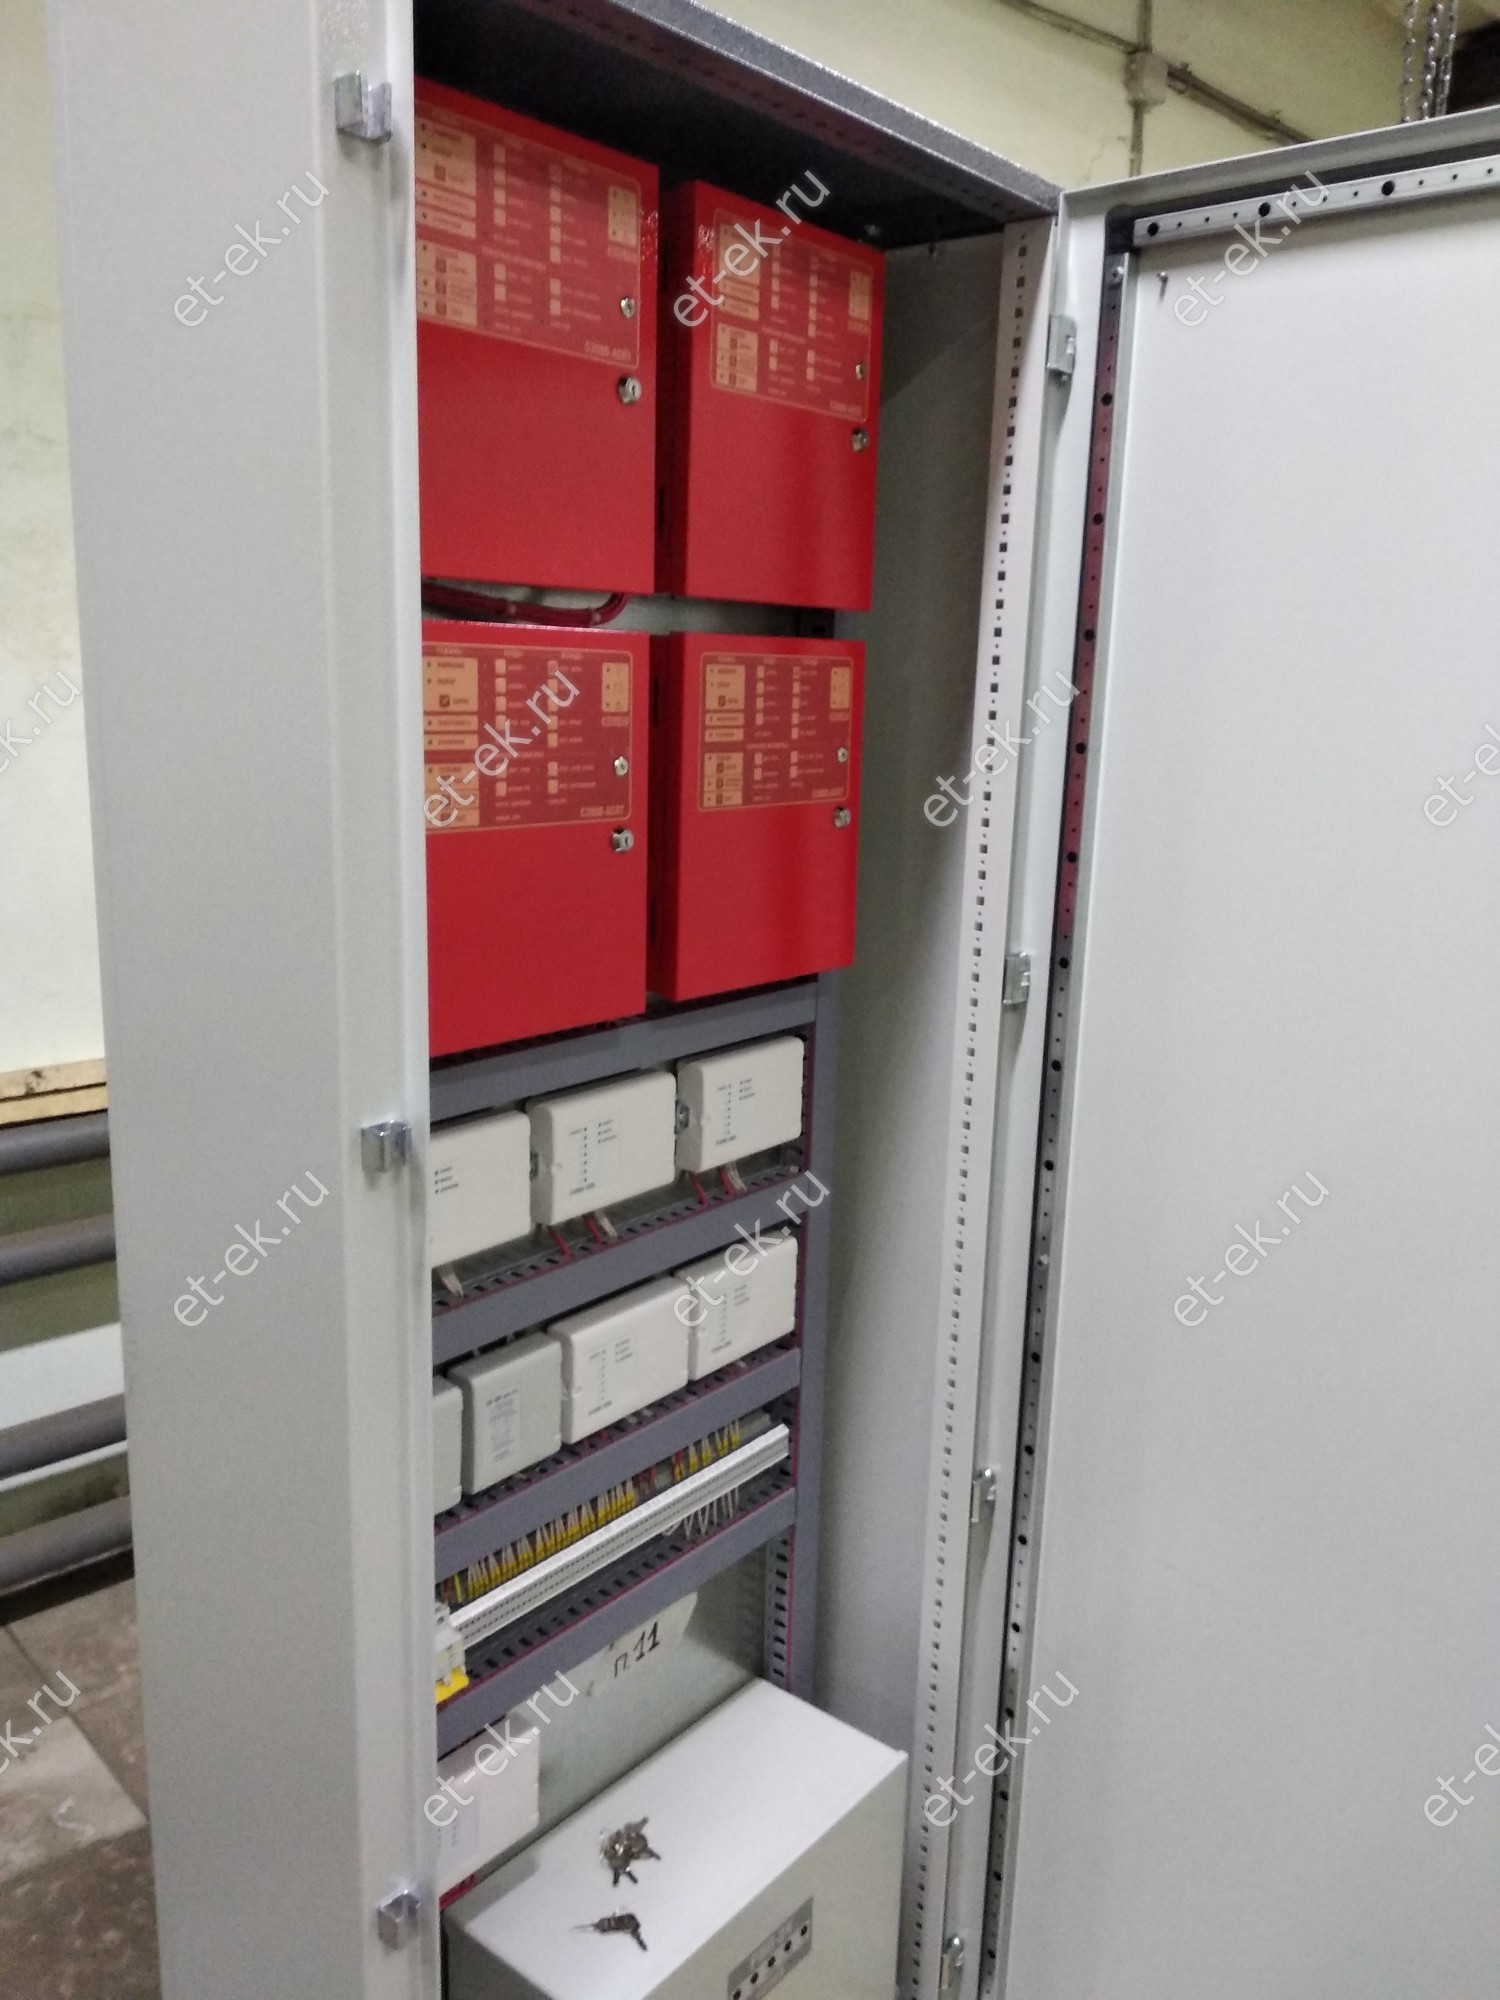 Шпс 12 исп 12 шкаф для установки приборов системы орион на din рейки